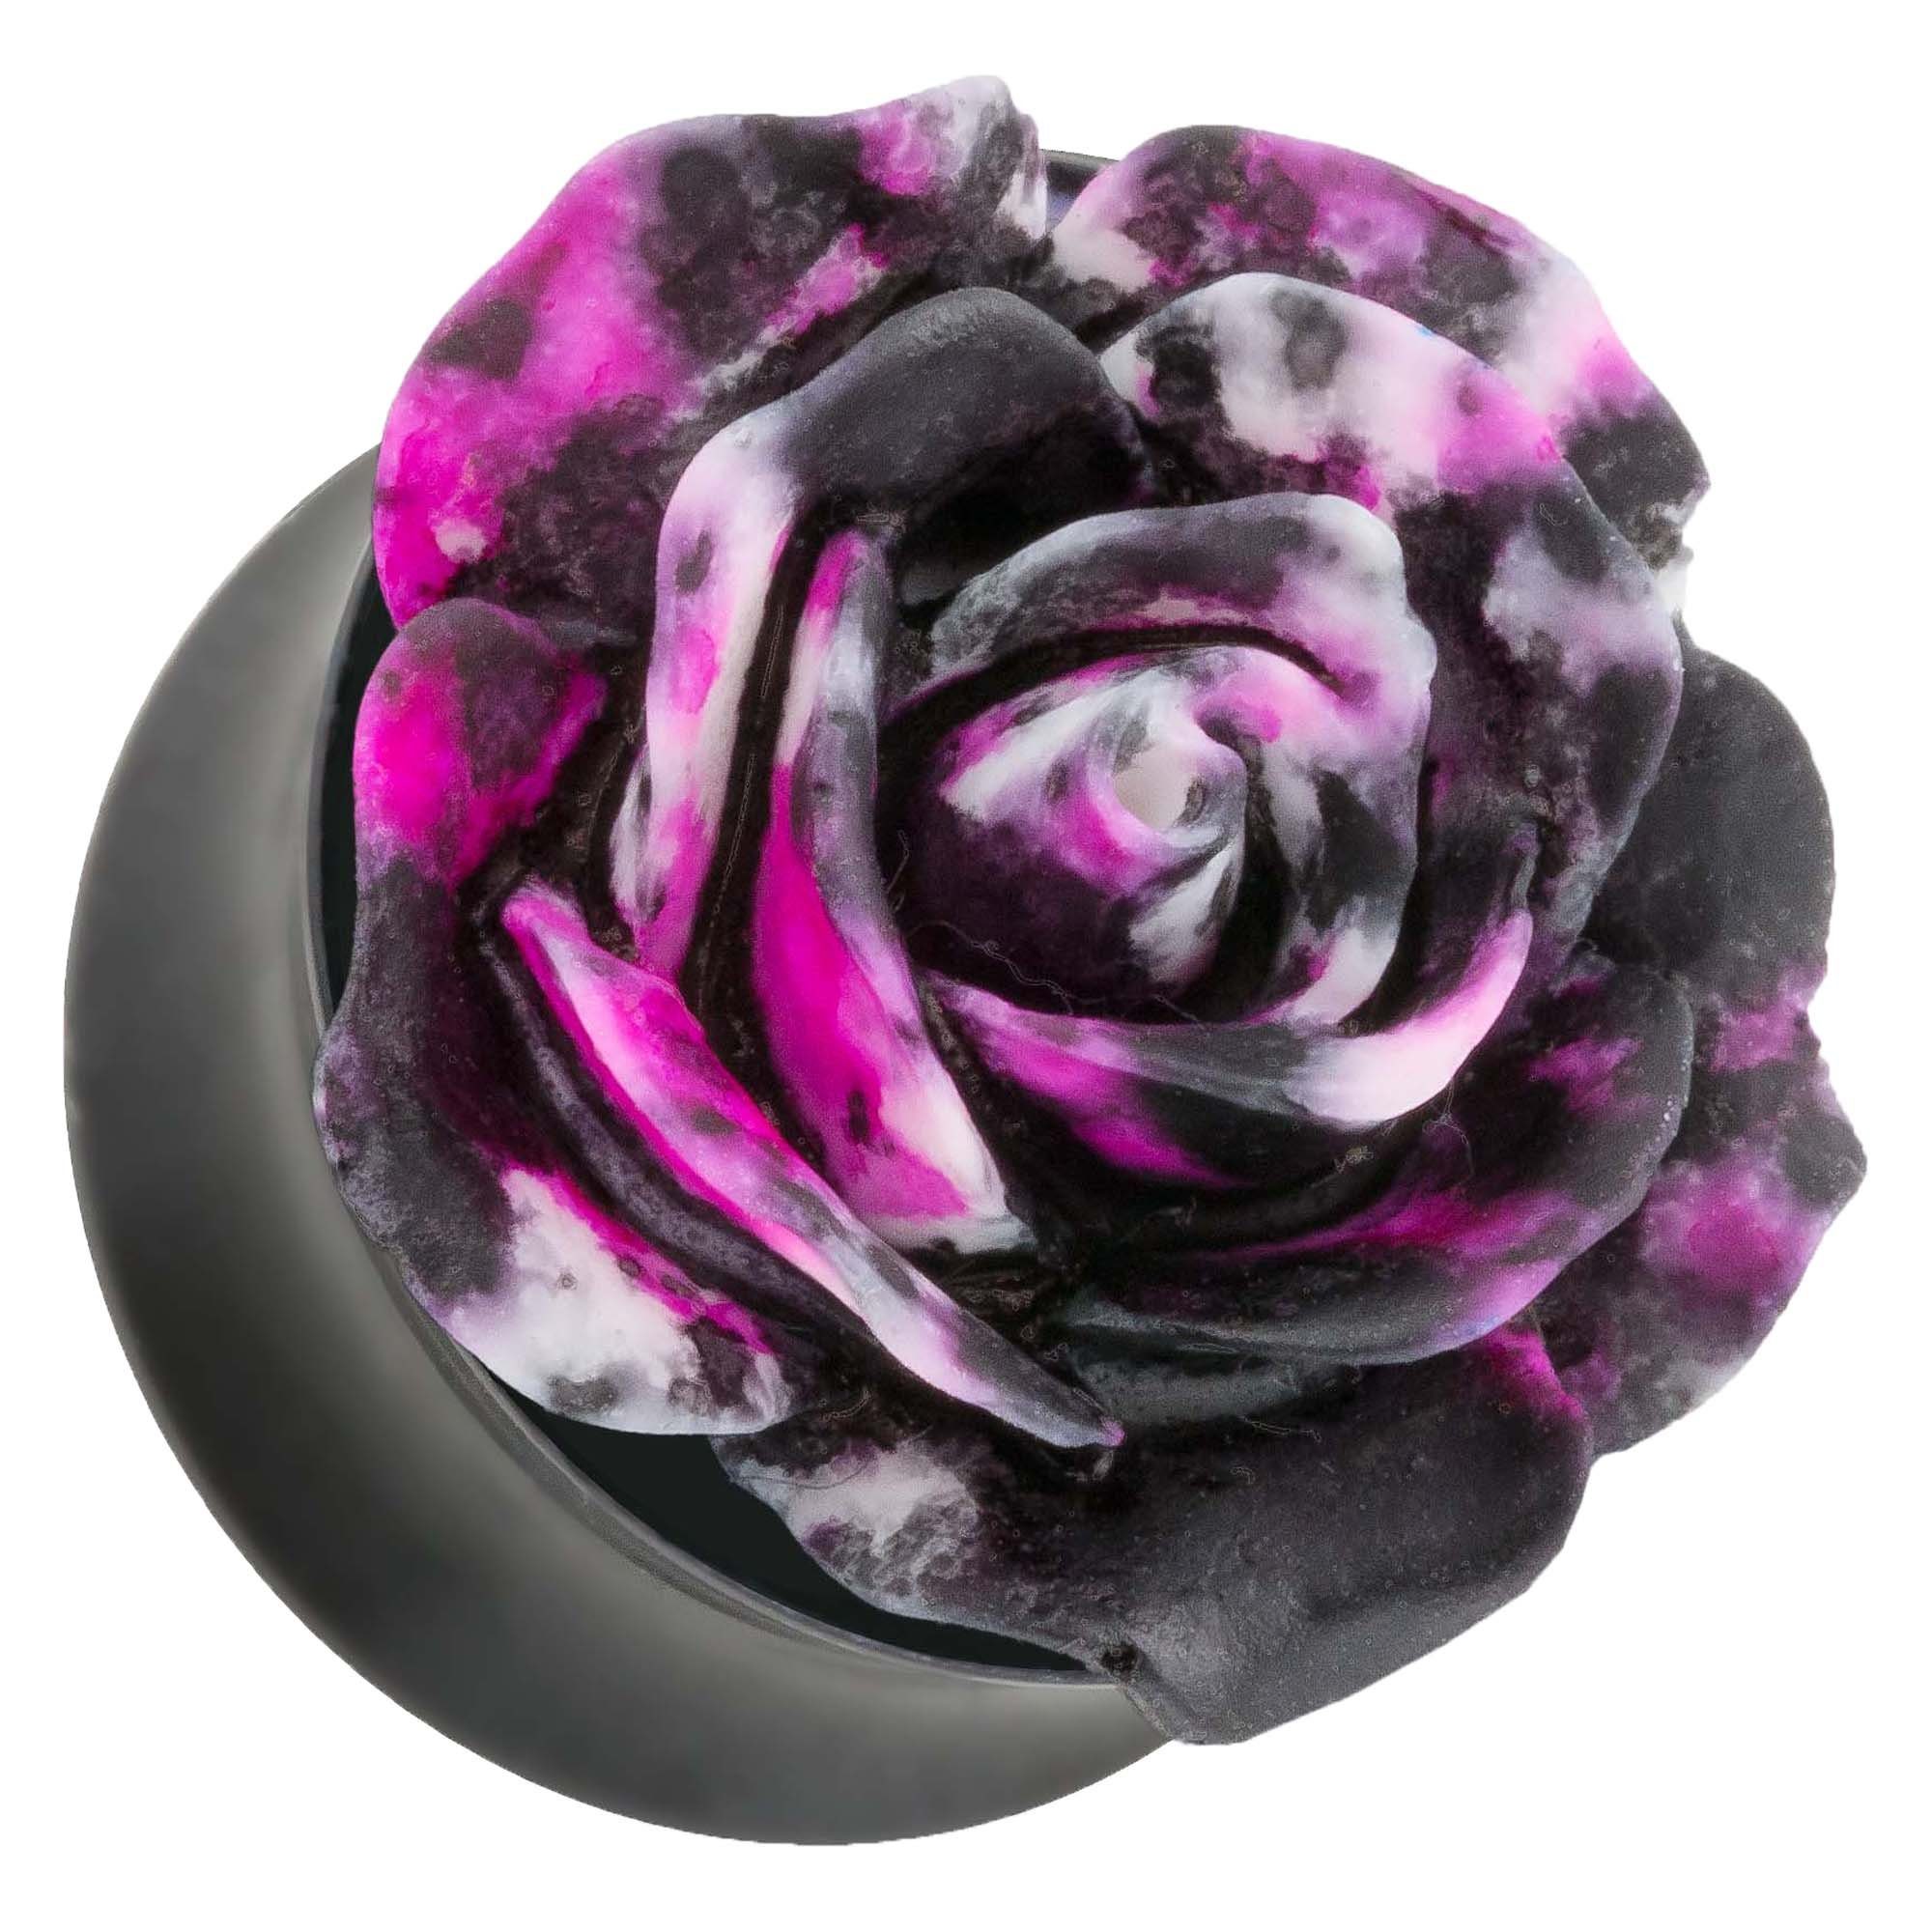 Taffstyle Plug Piercing Rose Plug Optik 3D Pink, Rose 3D in in Weiß Flesh Ohr Optik Tunnel Piercing Ohrpiercing Schwarz